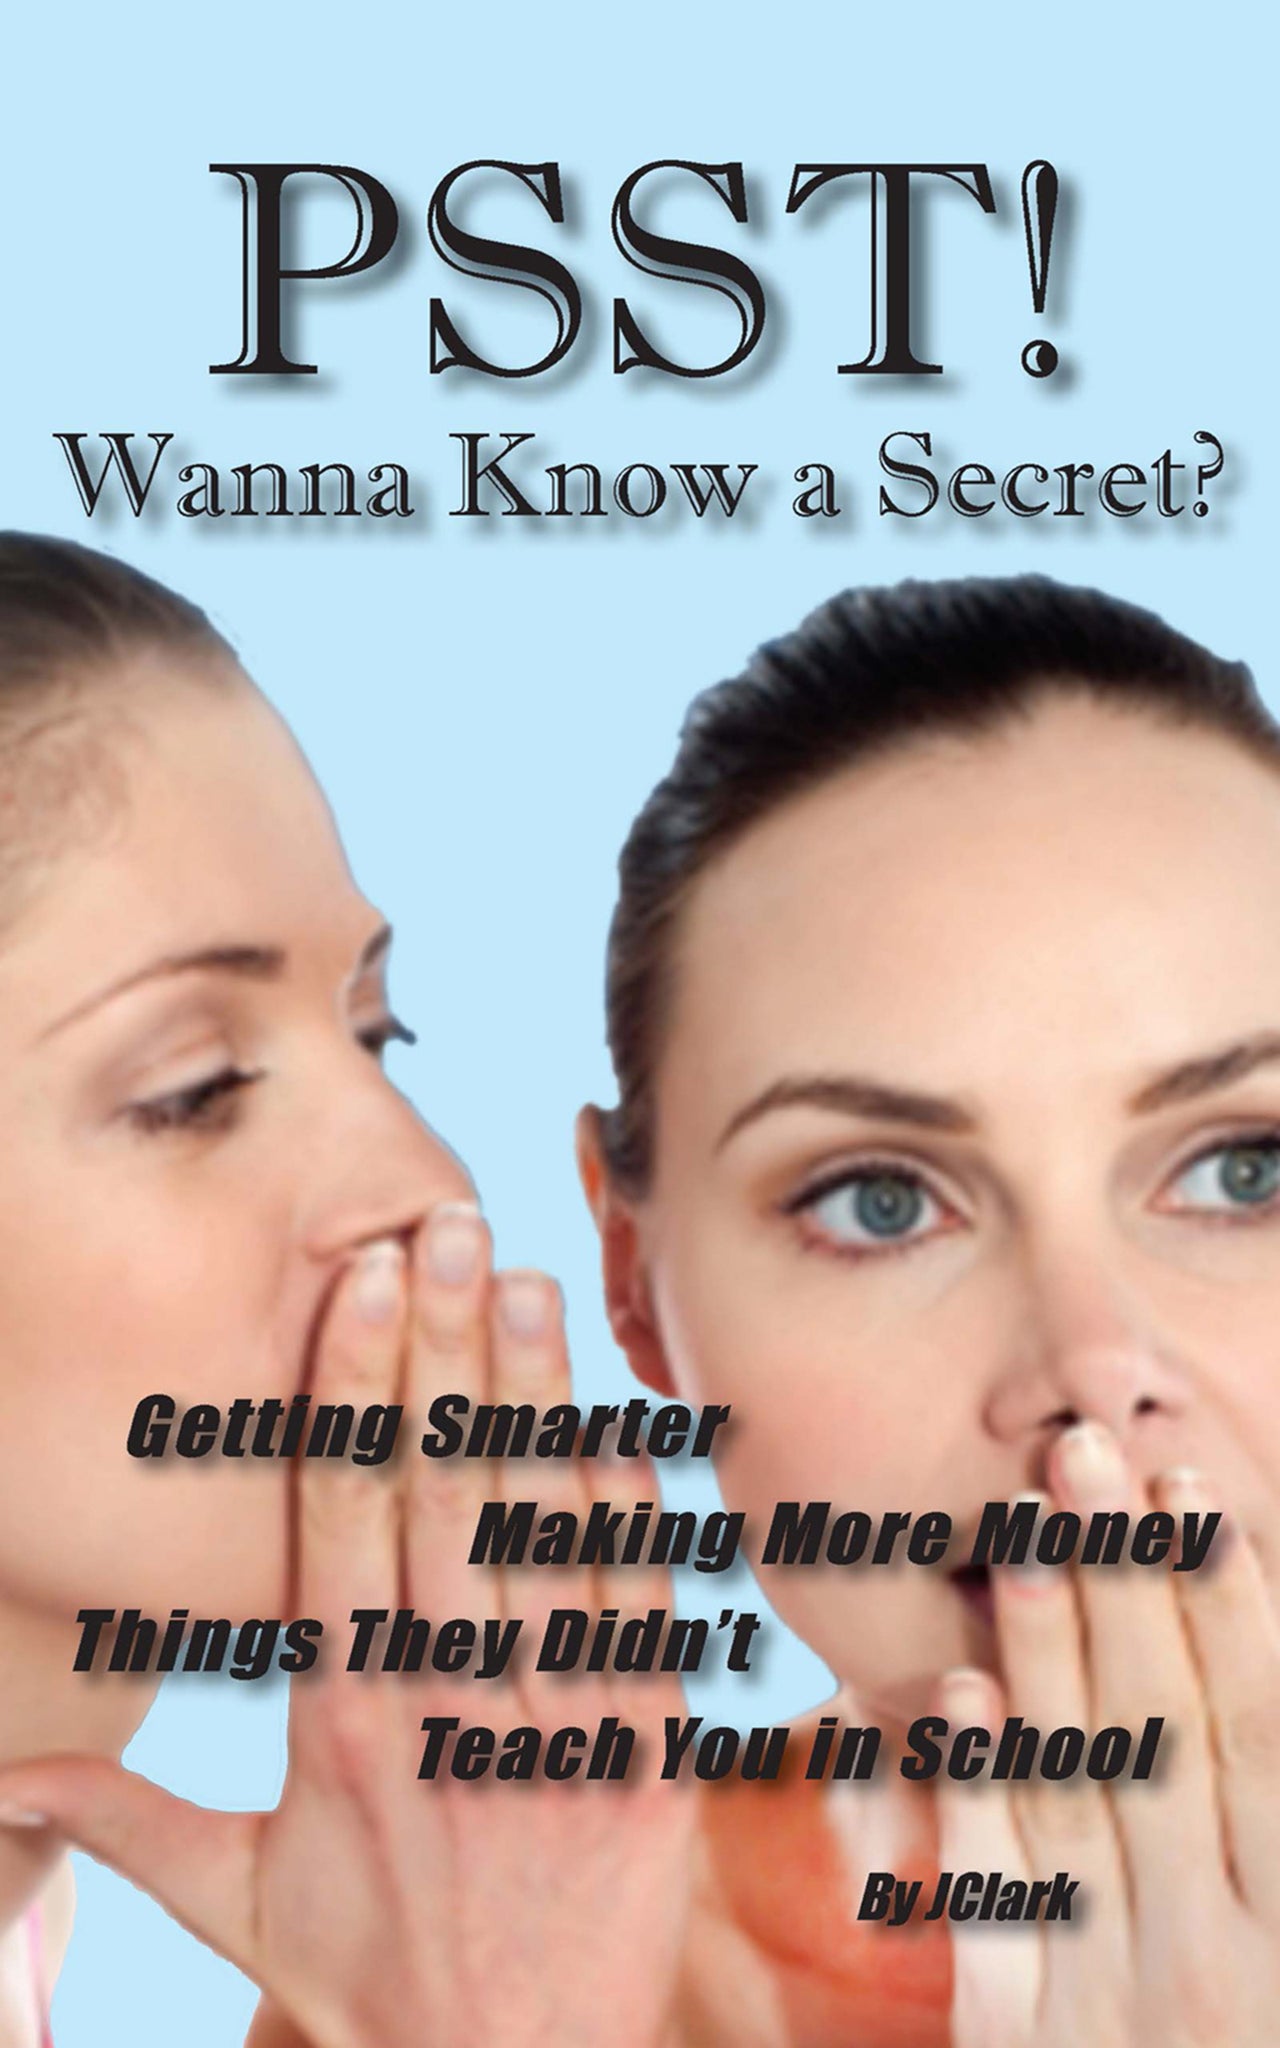 PSST! Wanna Know a Secret? by J Clark